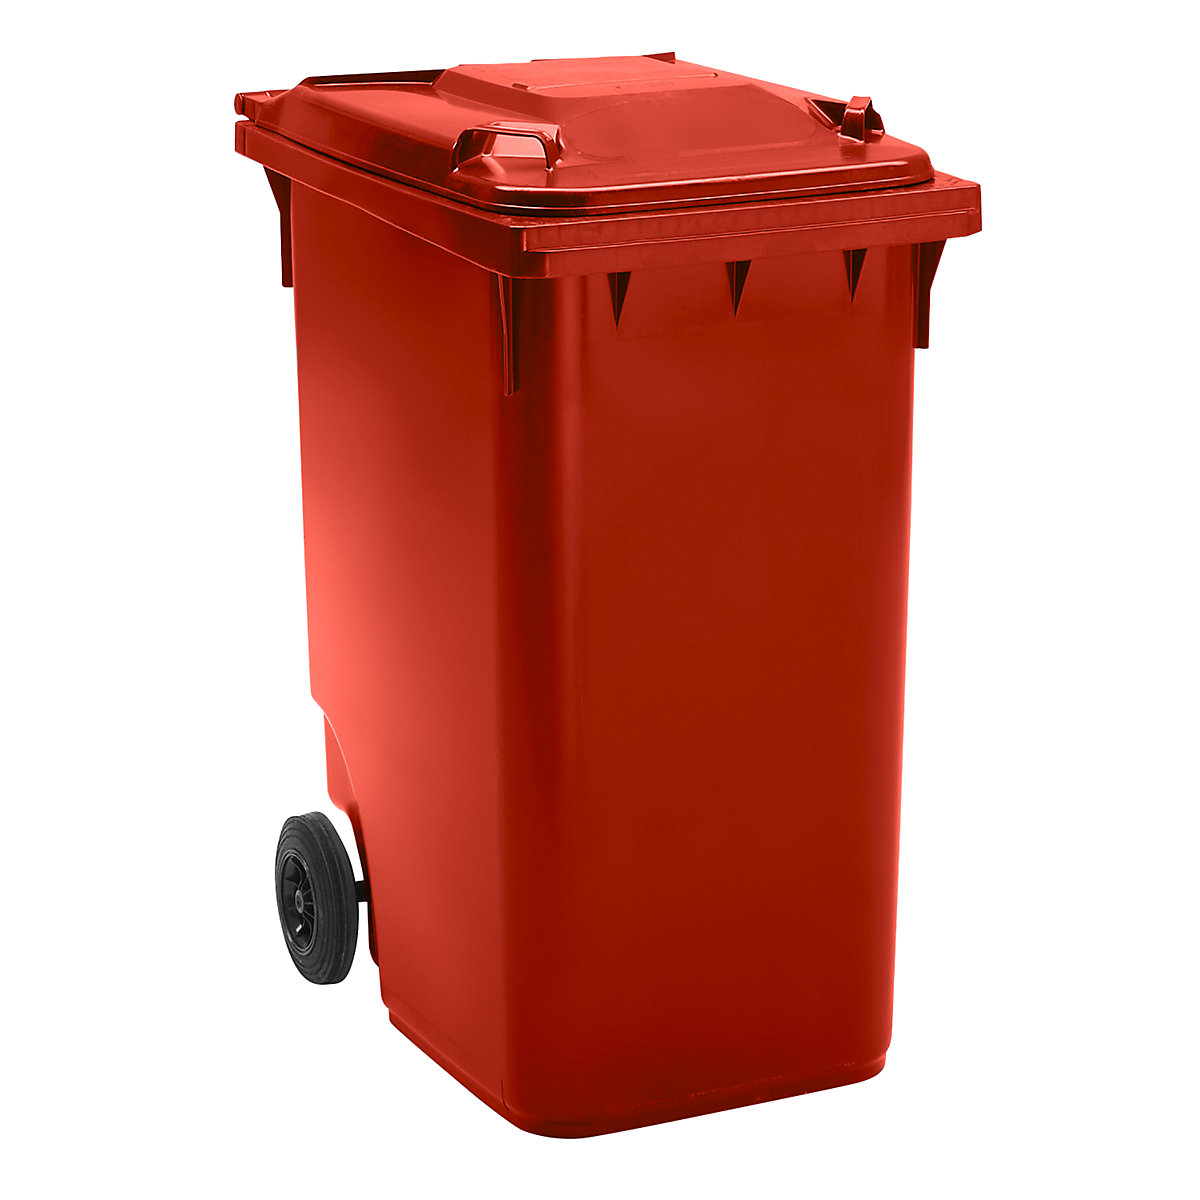 Contentor de lixo em plástico DIN EN 840, volume 360 l, LxAxP 665 x 1115 x 880 mm, Ø das rodas 200 mm, vermelho, a partir de 5 unid.-5